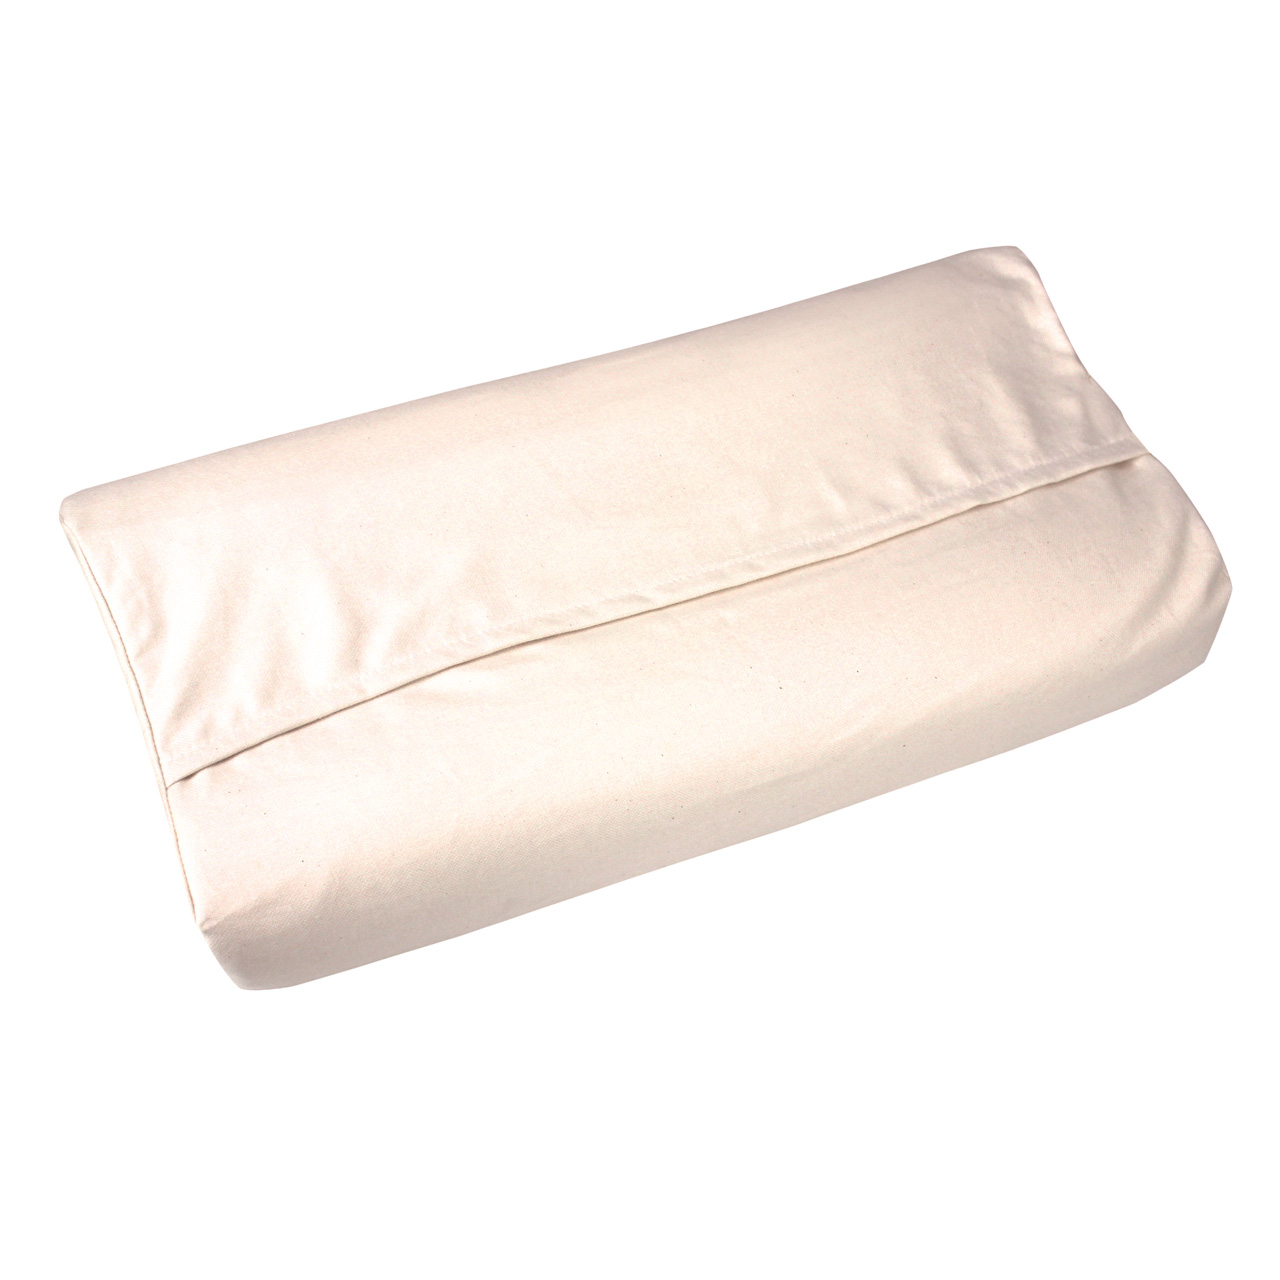 billerbeck-neck-support-pillow-cosisoft-natural-latex-vegan_40x80cm_cotton-cover_hotel-closure